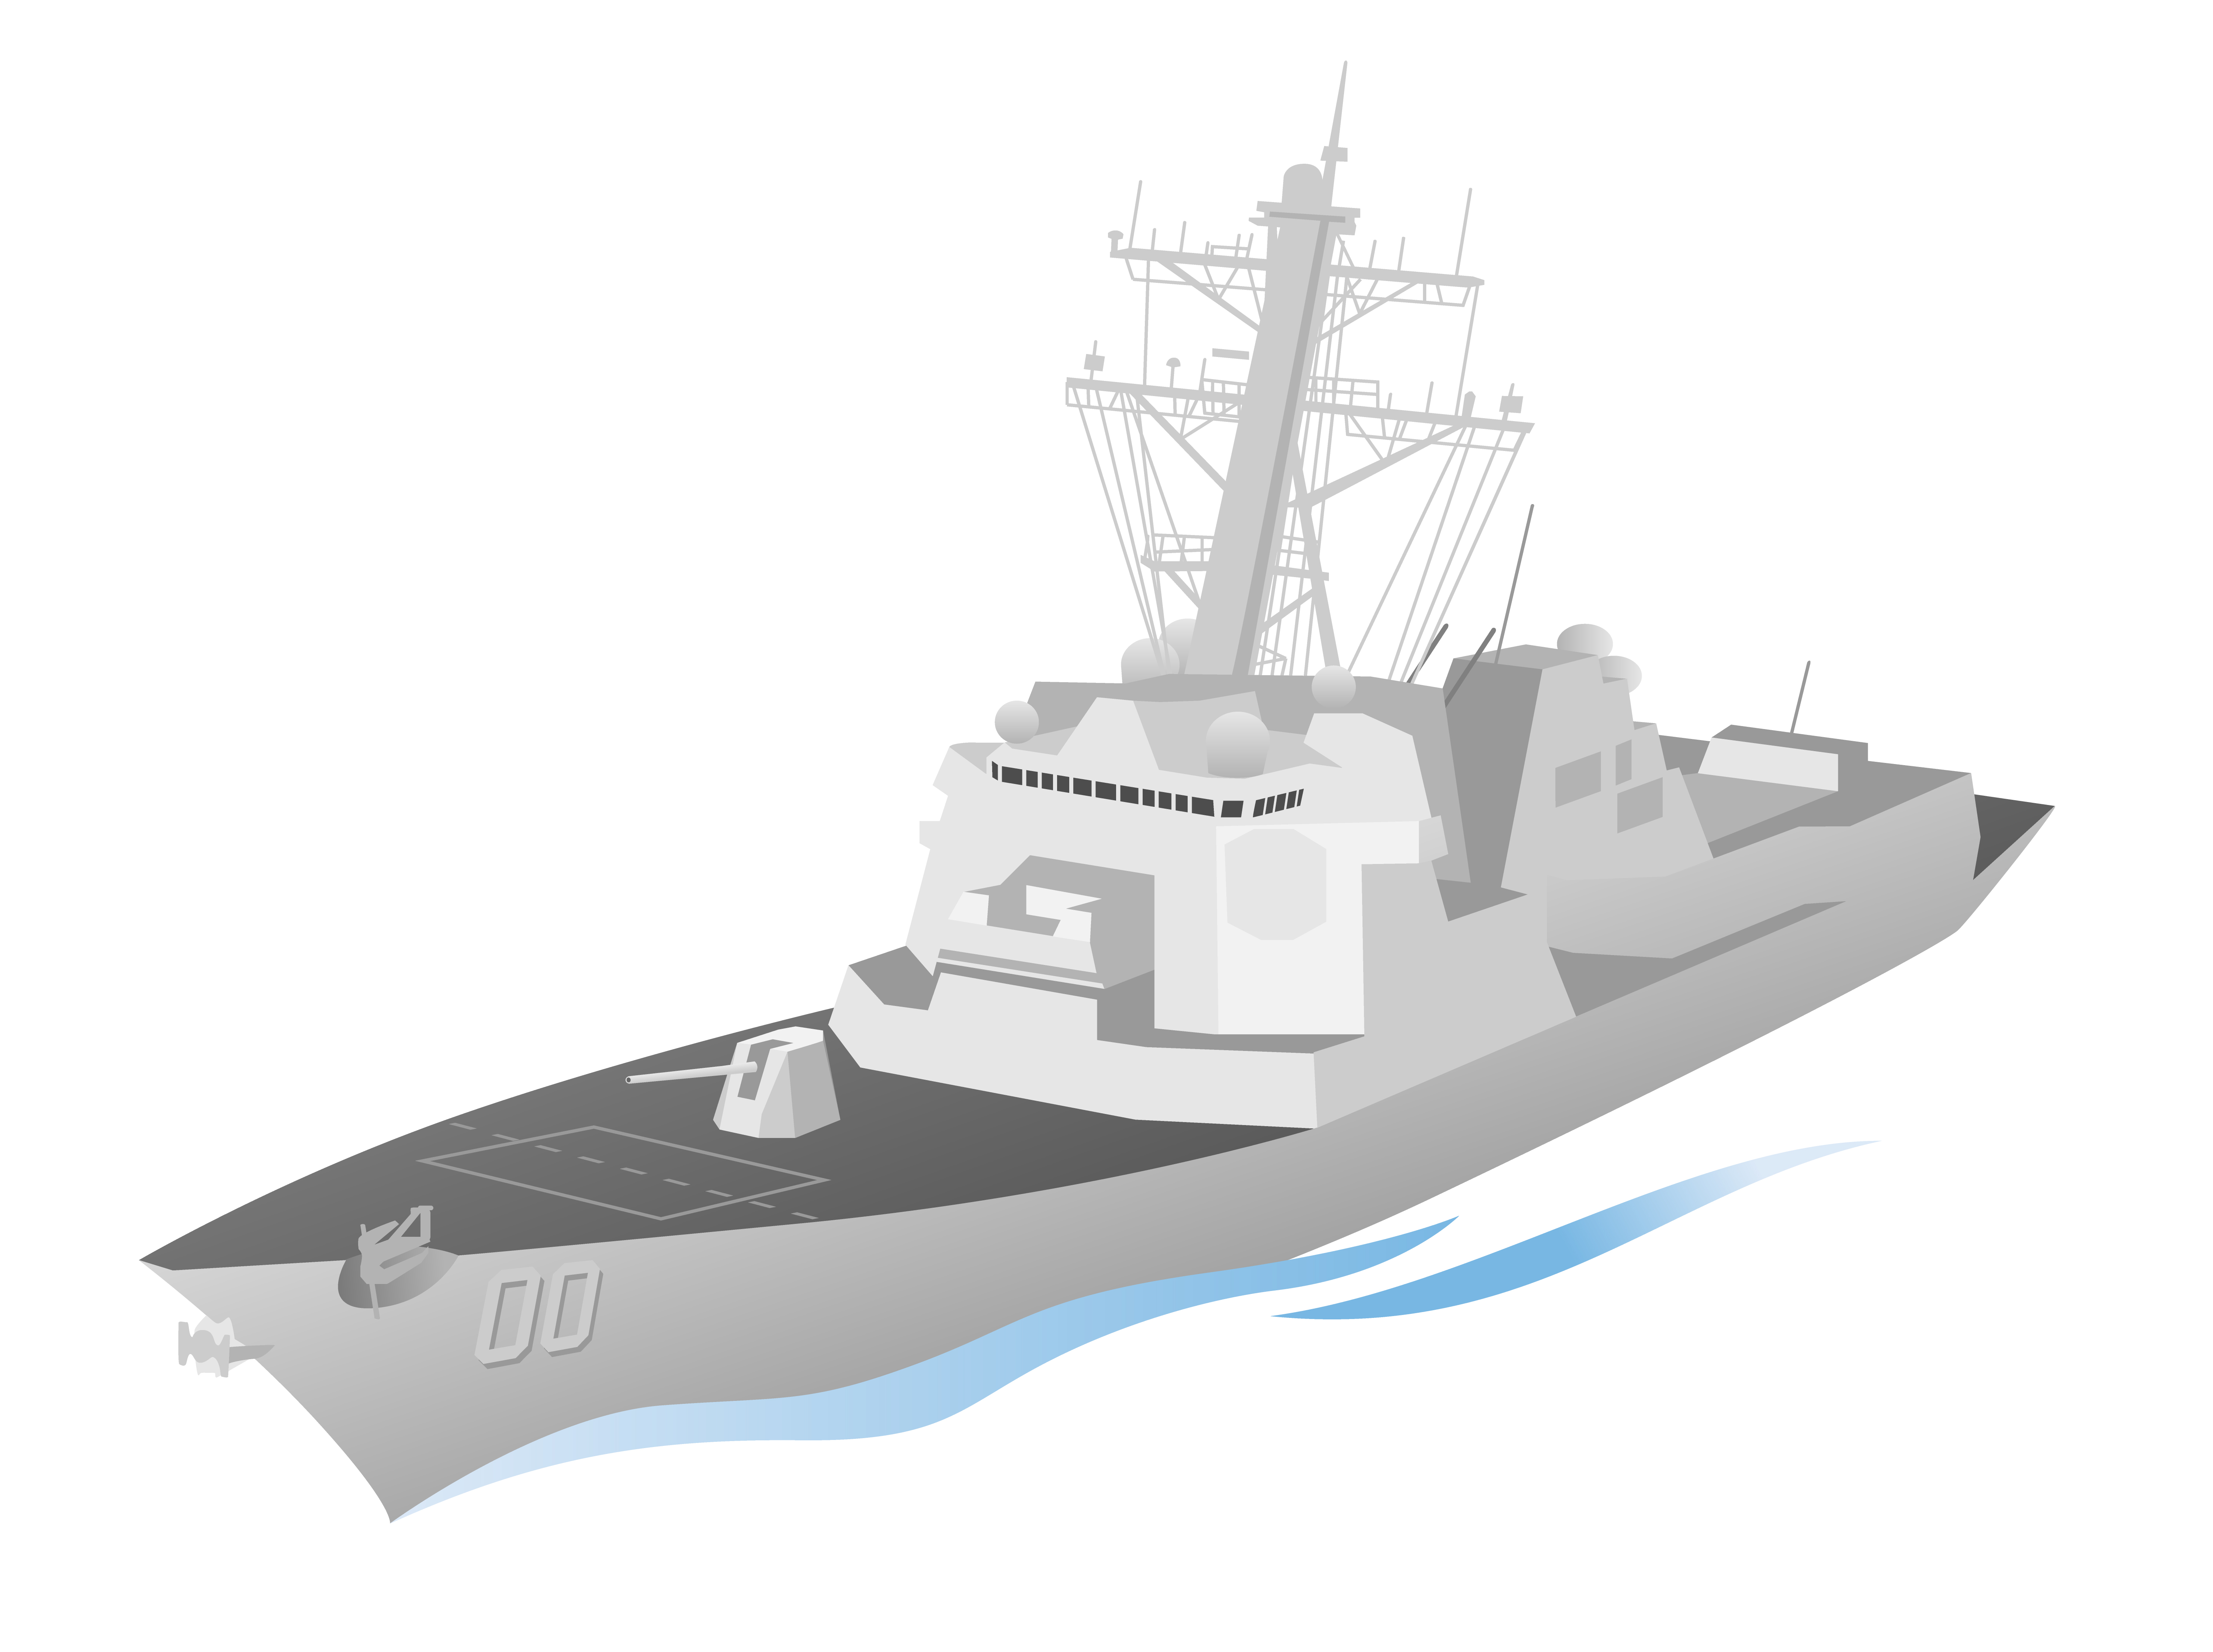 Naval Military War Ship Vector Graphic 491884 - Download Free Vectors